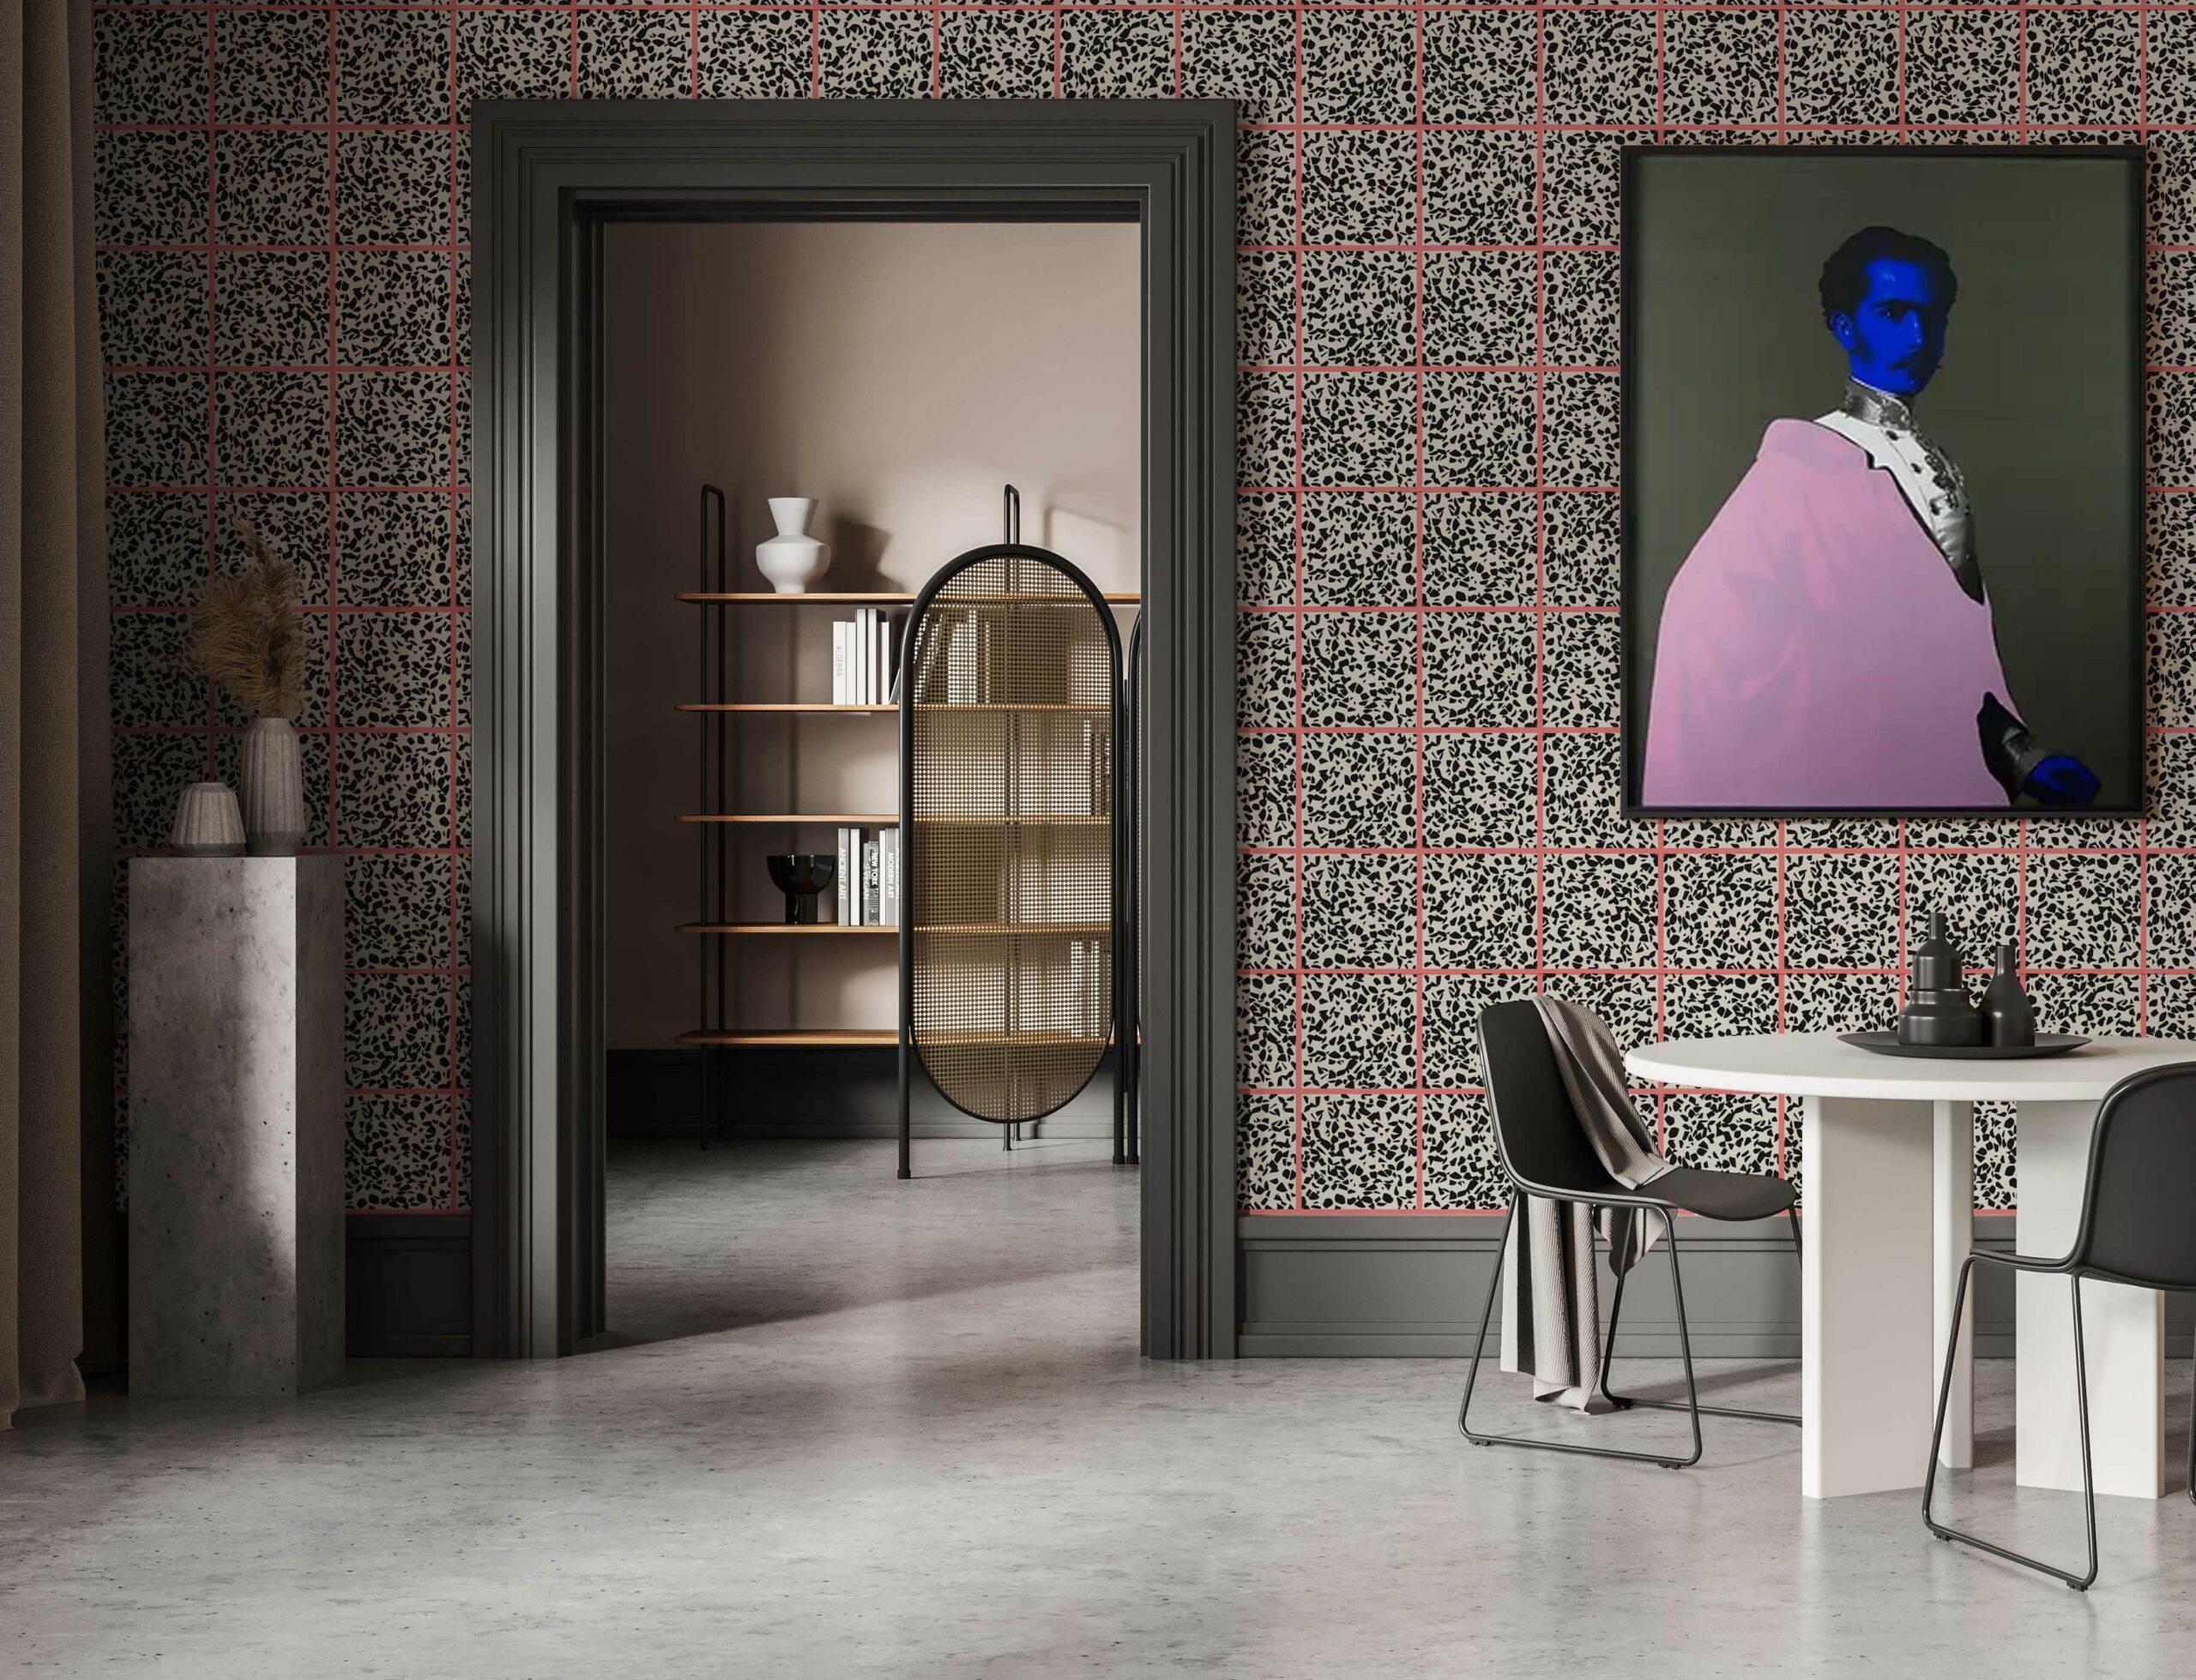 MaVoix-wallpaper Fuga fragola -by-Studio-Lievito-pattern-living room full ambient